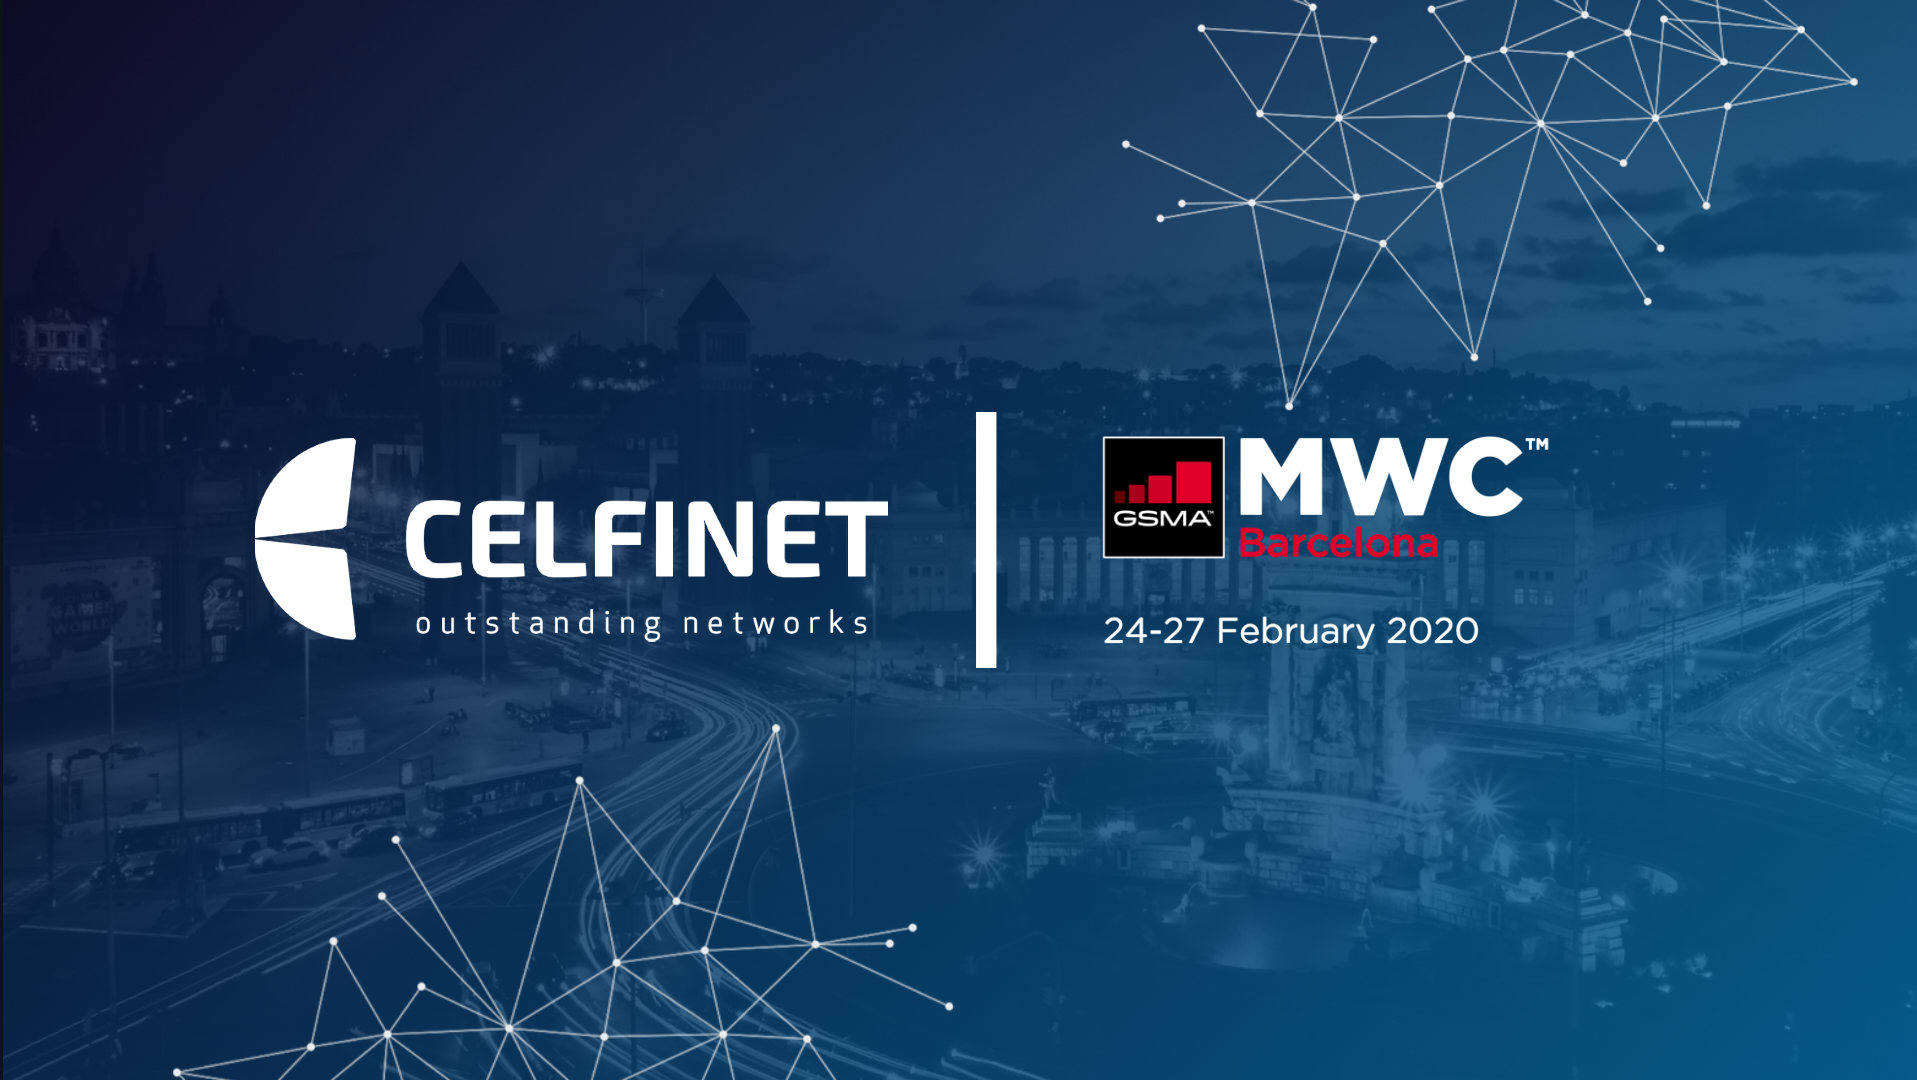 Celfinet at Mobile World Congress 2020 in Barcelona